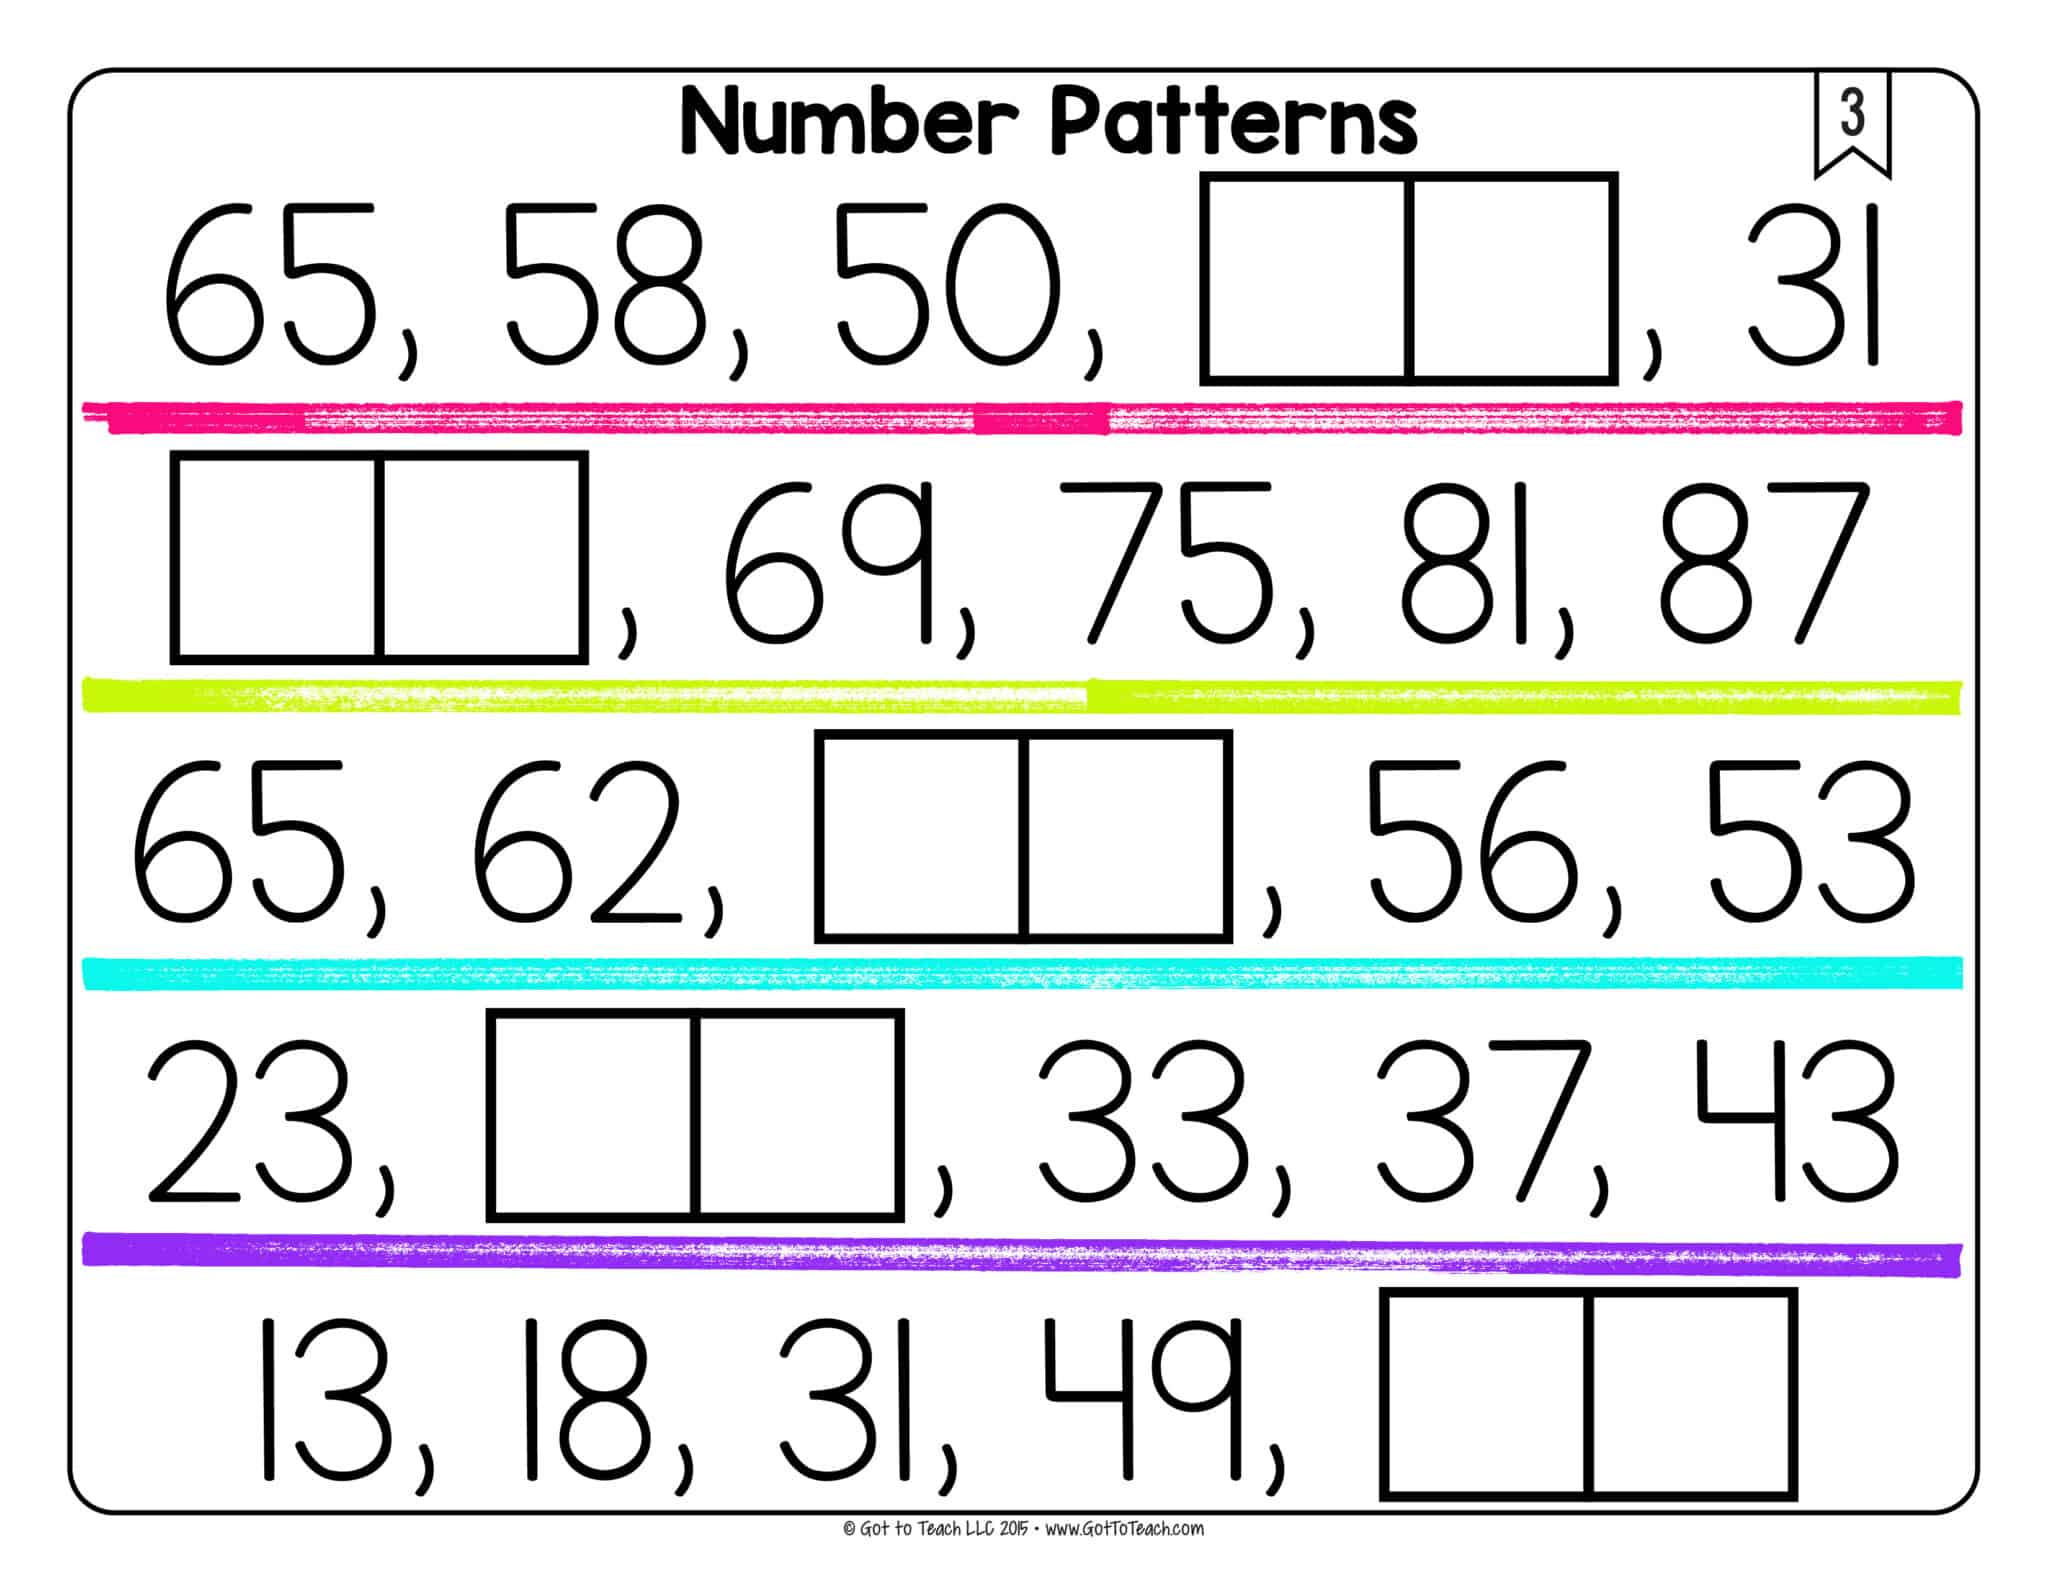 Analyze Number Patterns